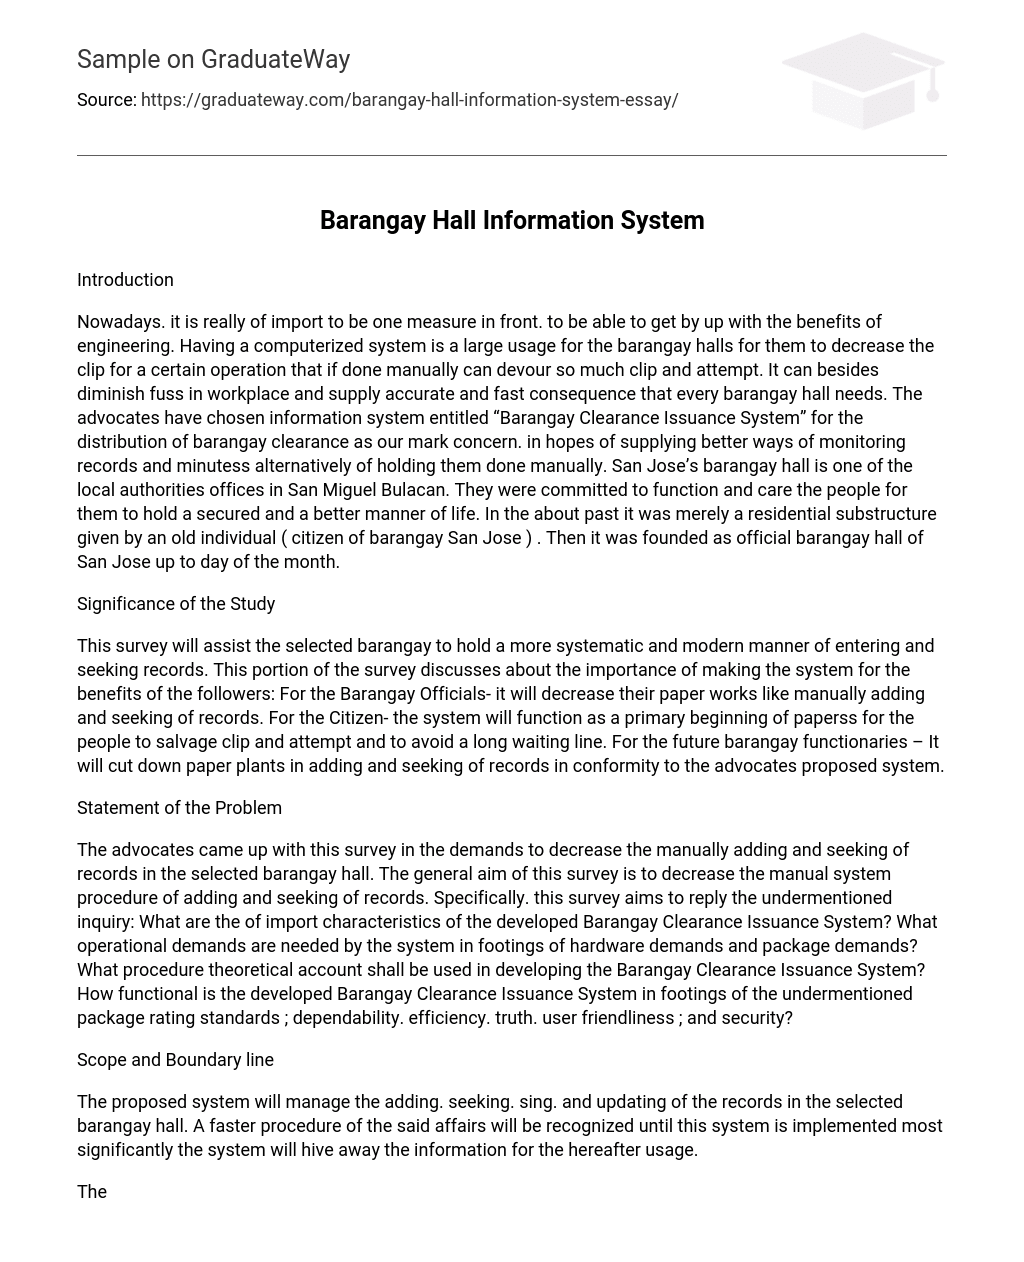 Barangay Hall Information System Narrative Essay